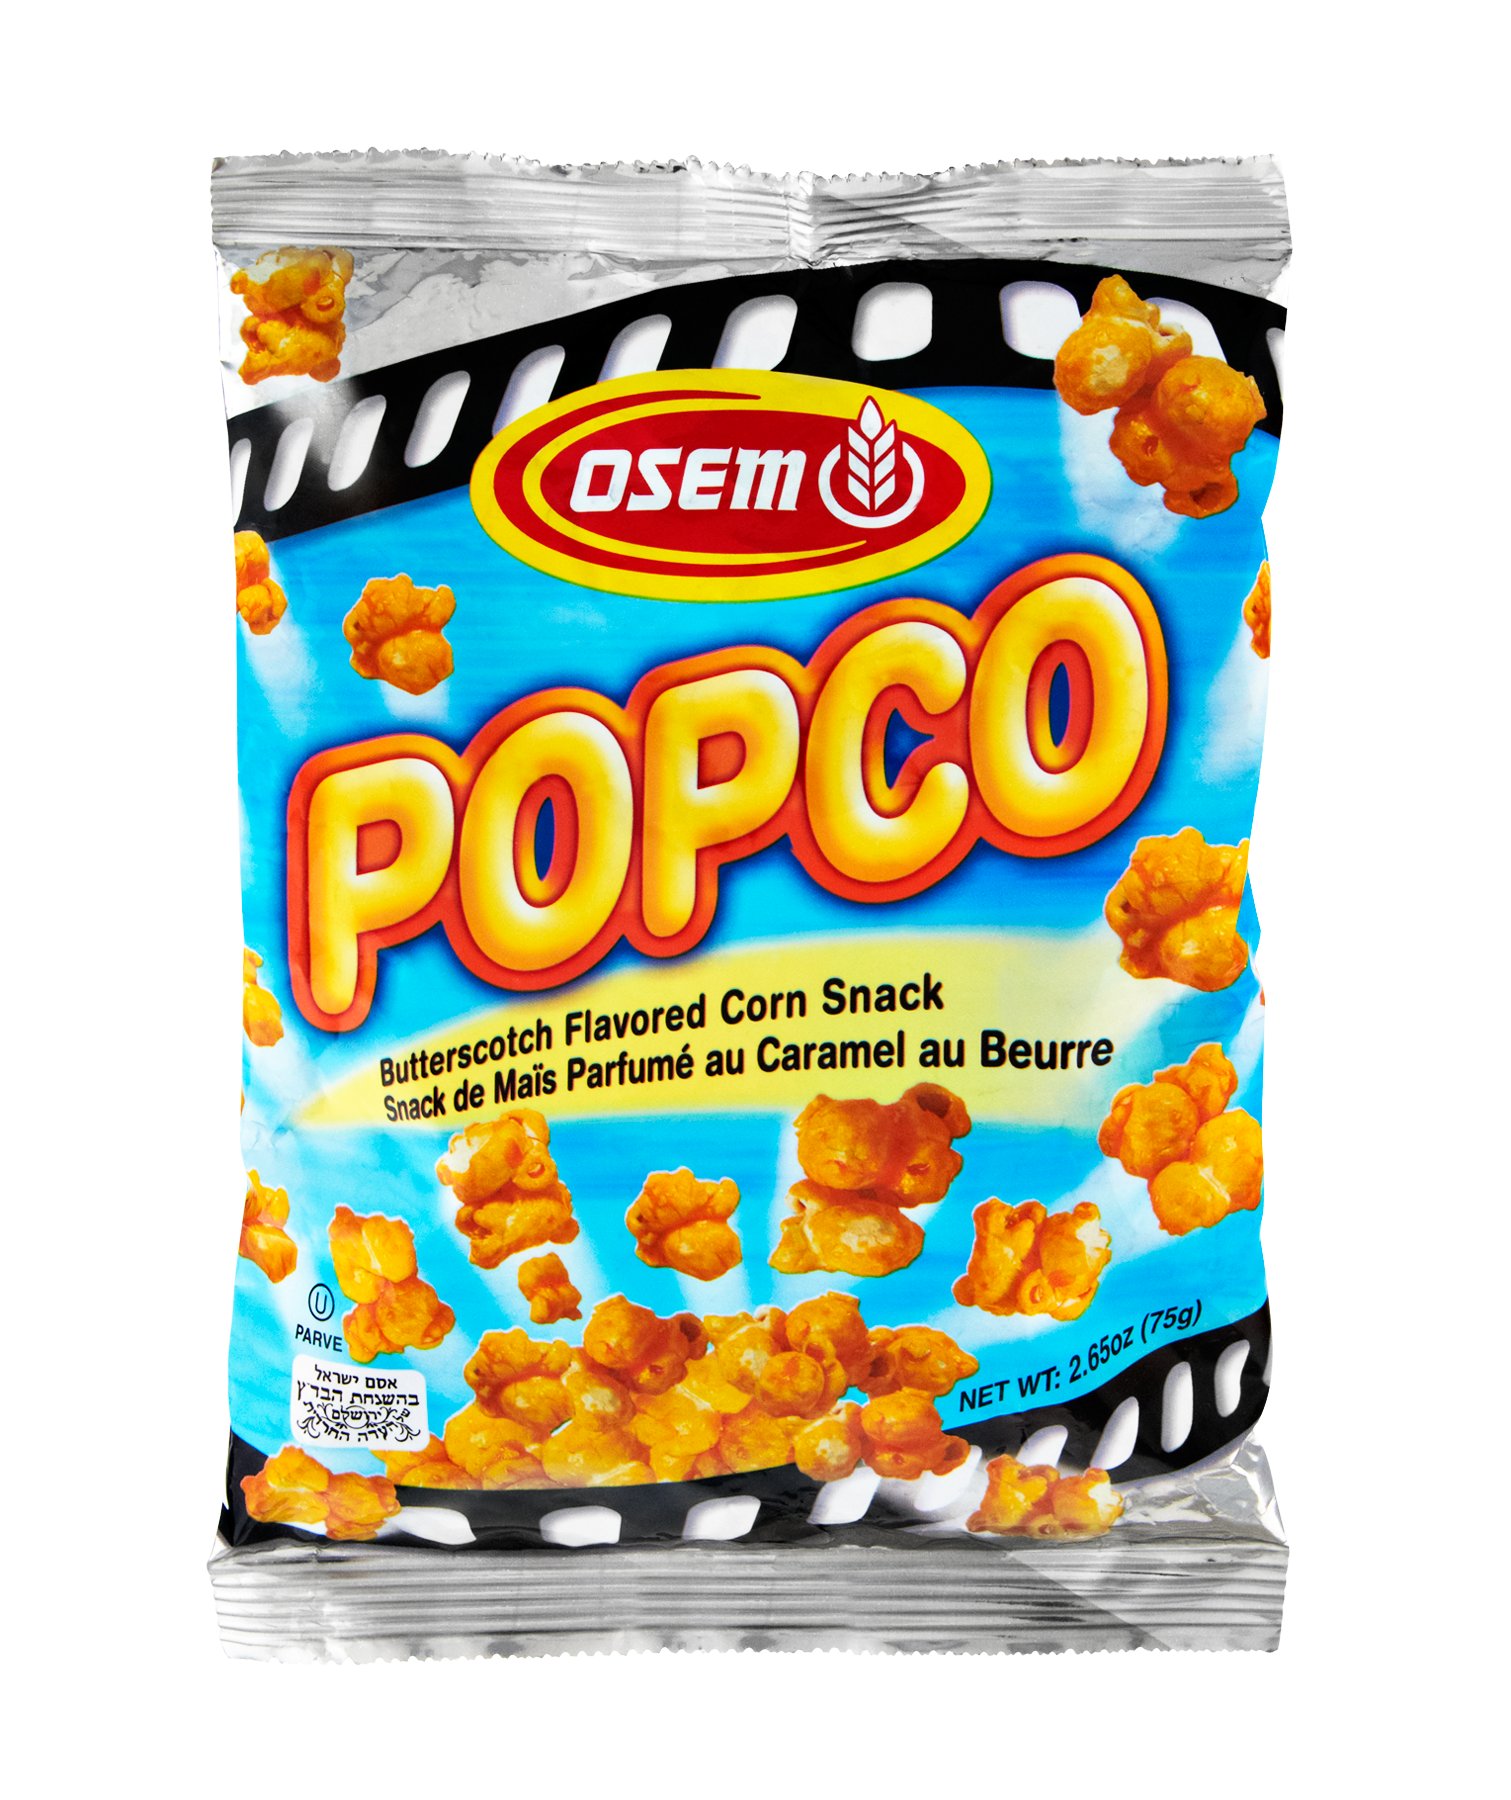 Osem Popco - Shop Popcorn at H-E-B